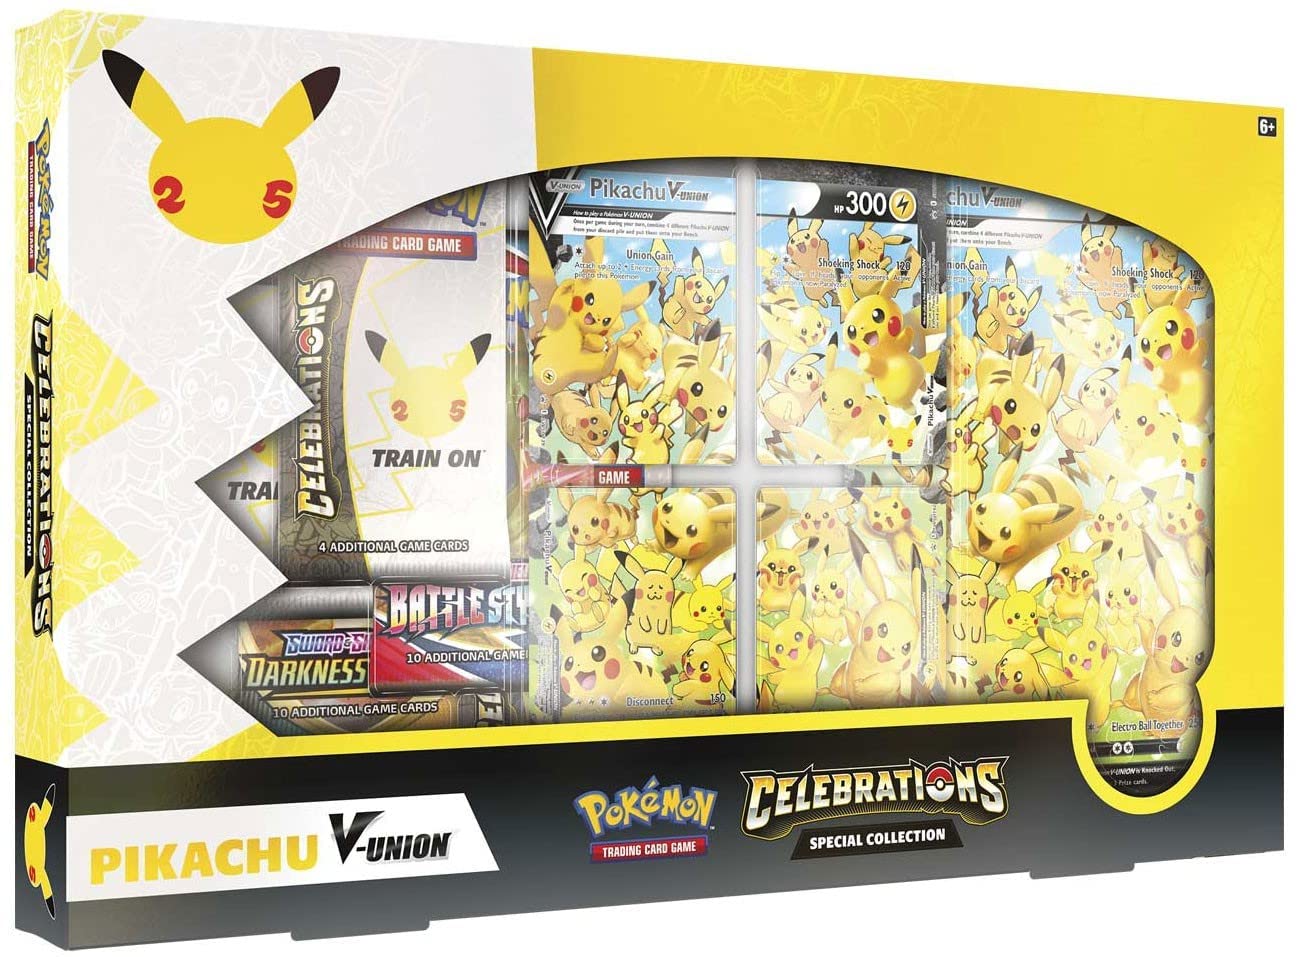 Pokémon - Celebrations Premium Playmat Collection Pikachu V-Union